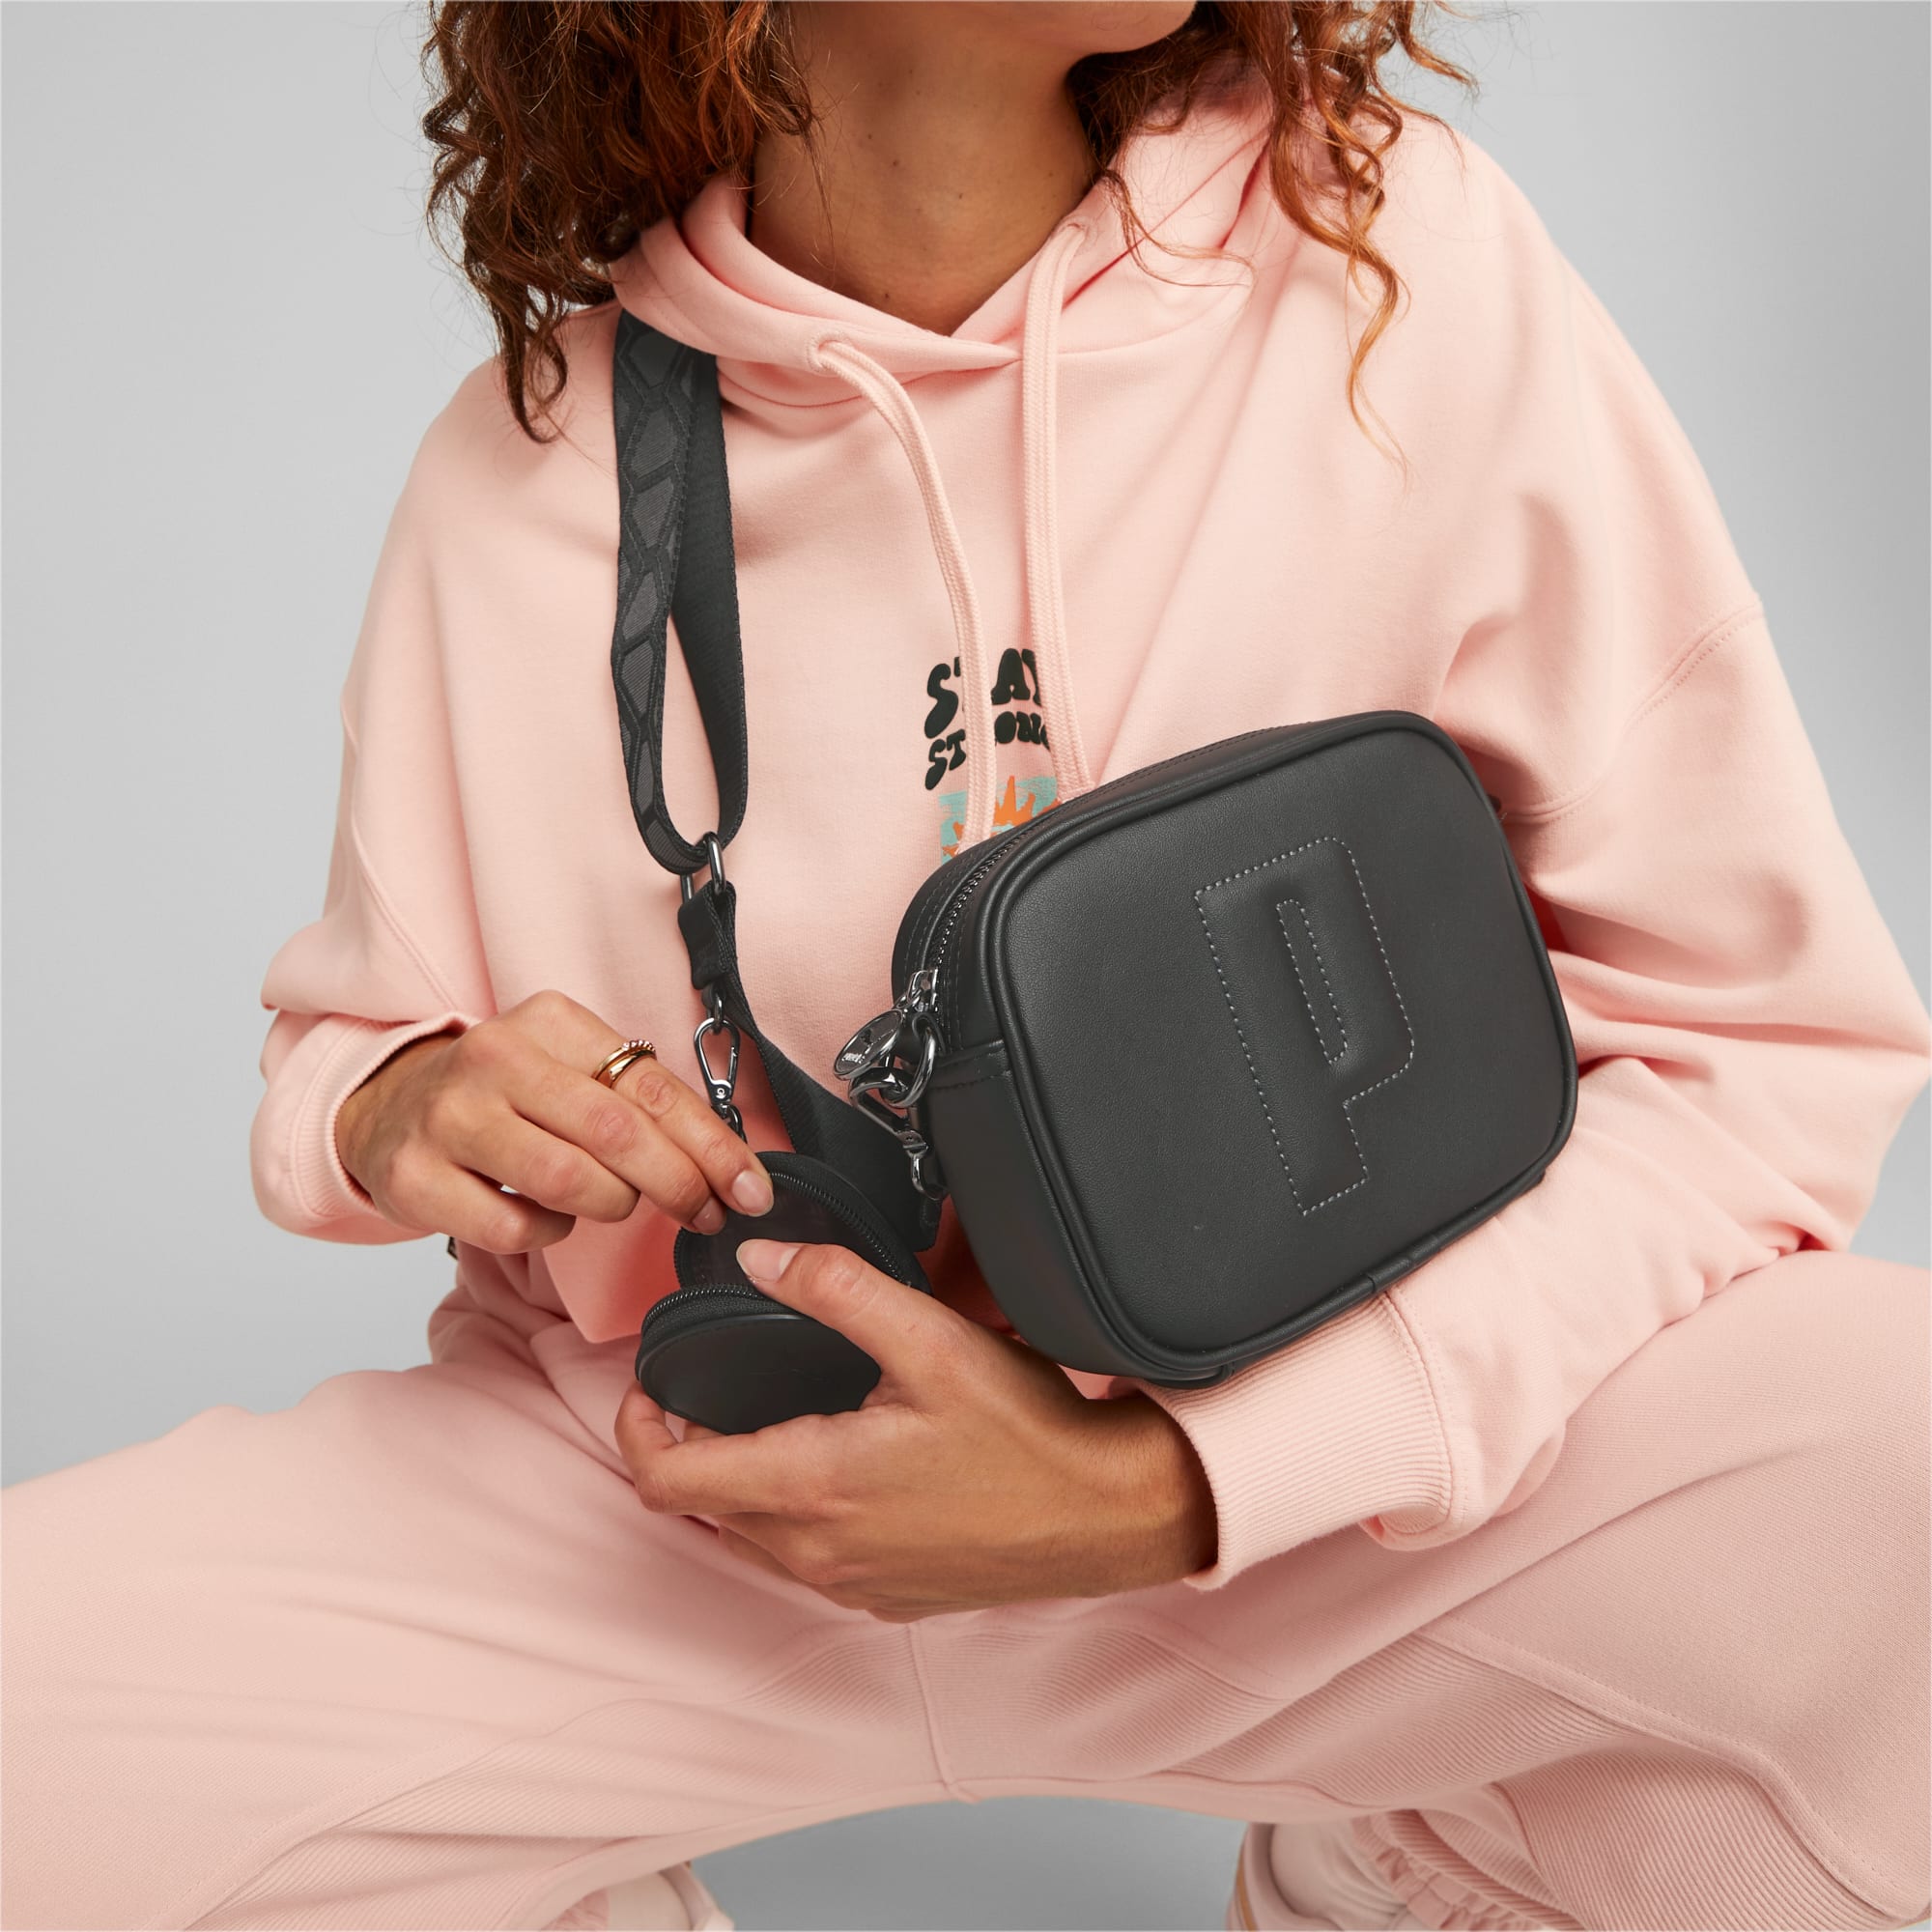 Women's PUMA Sense Cross Body Bag, Black, Accessories